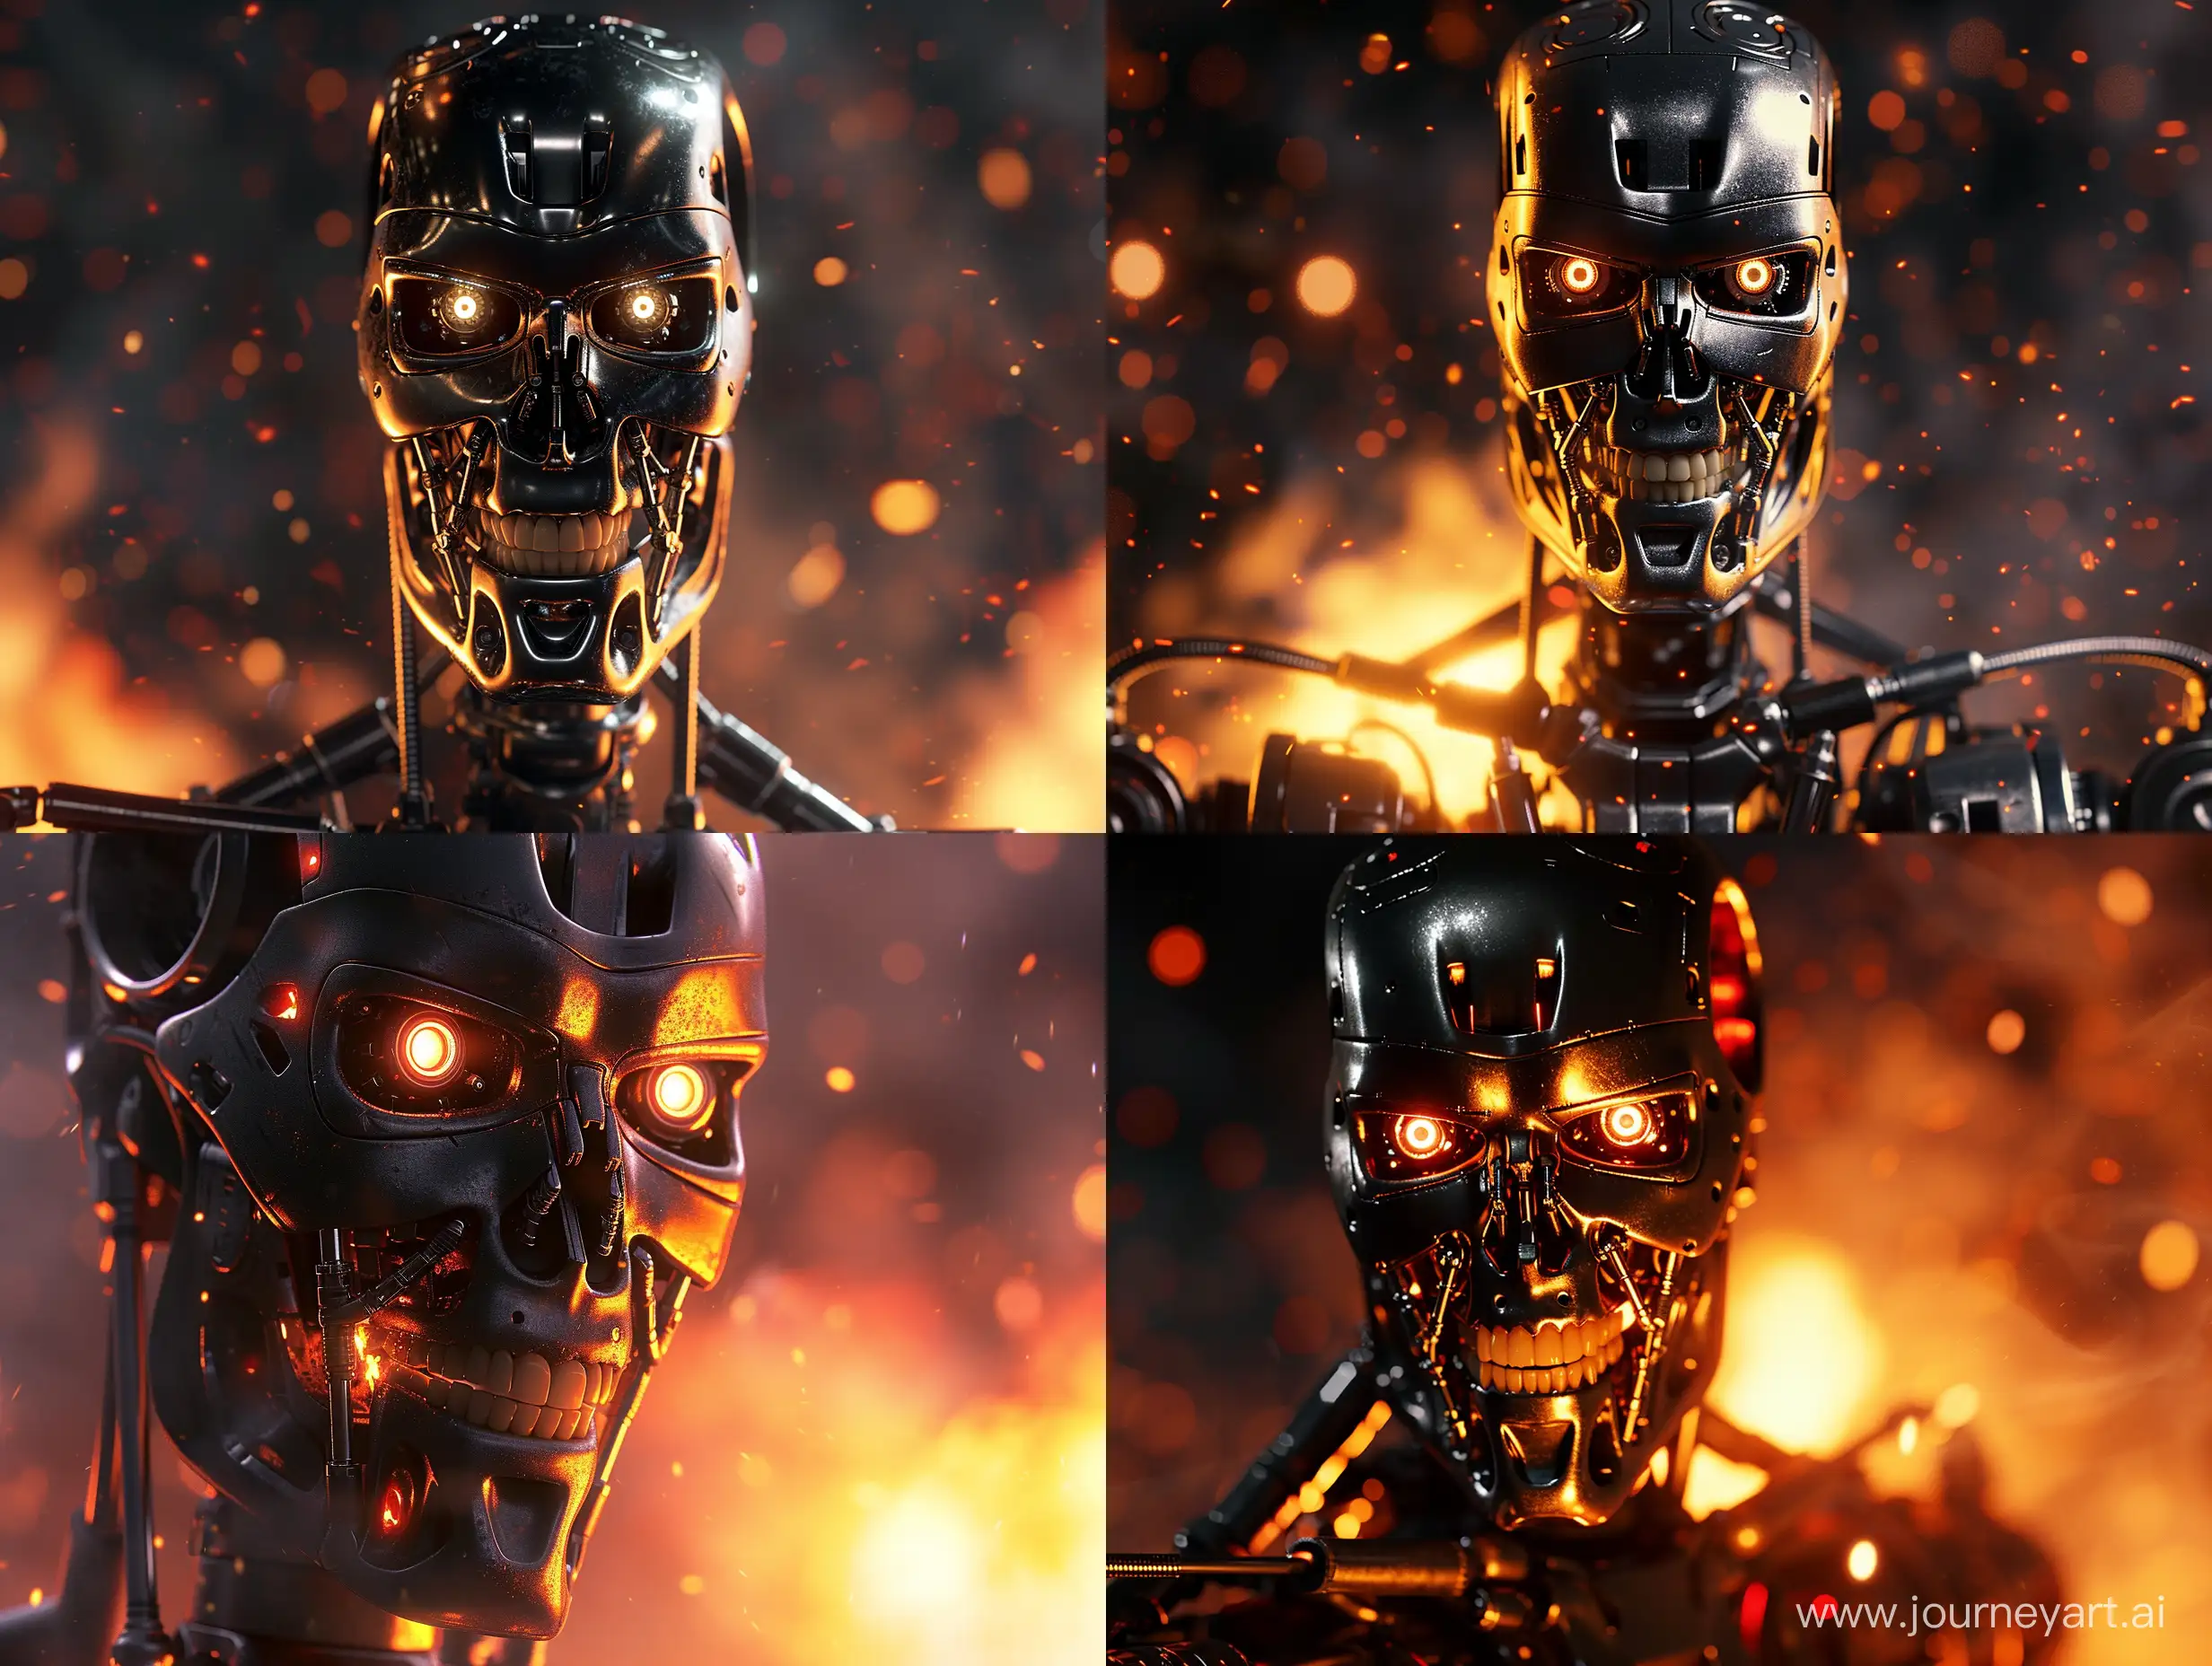 Menacing-Terminator-Robot-in-Fiery-Realism